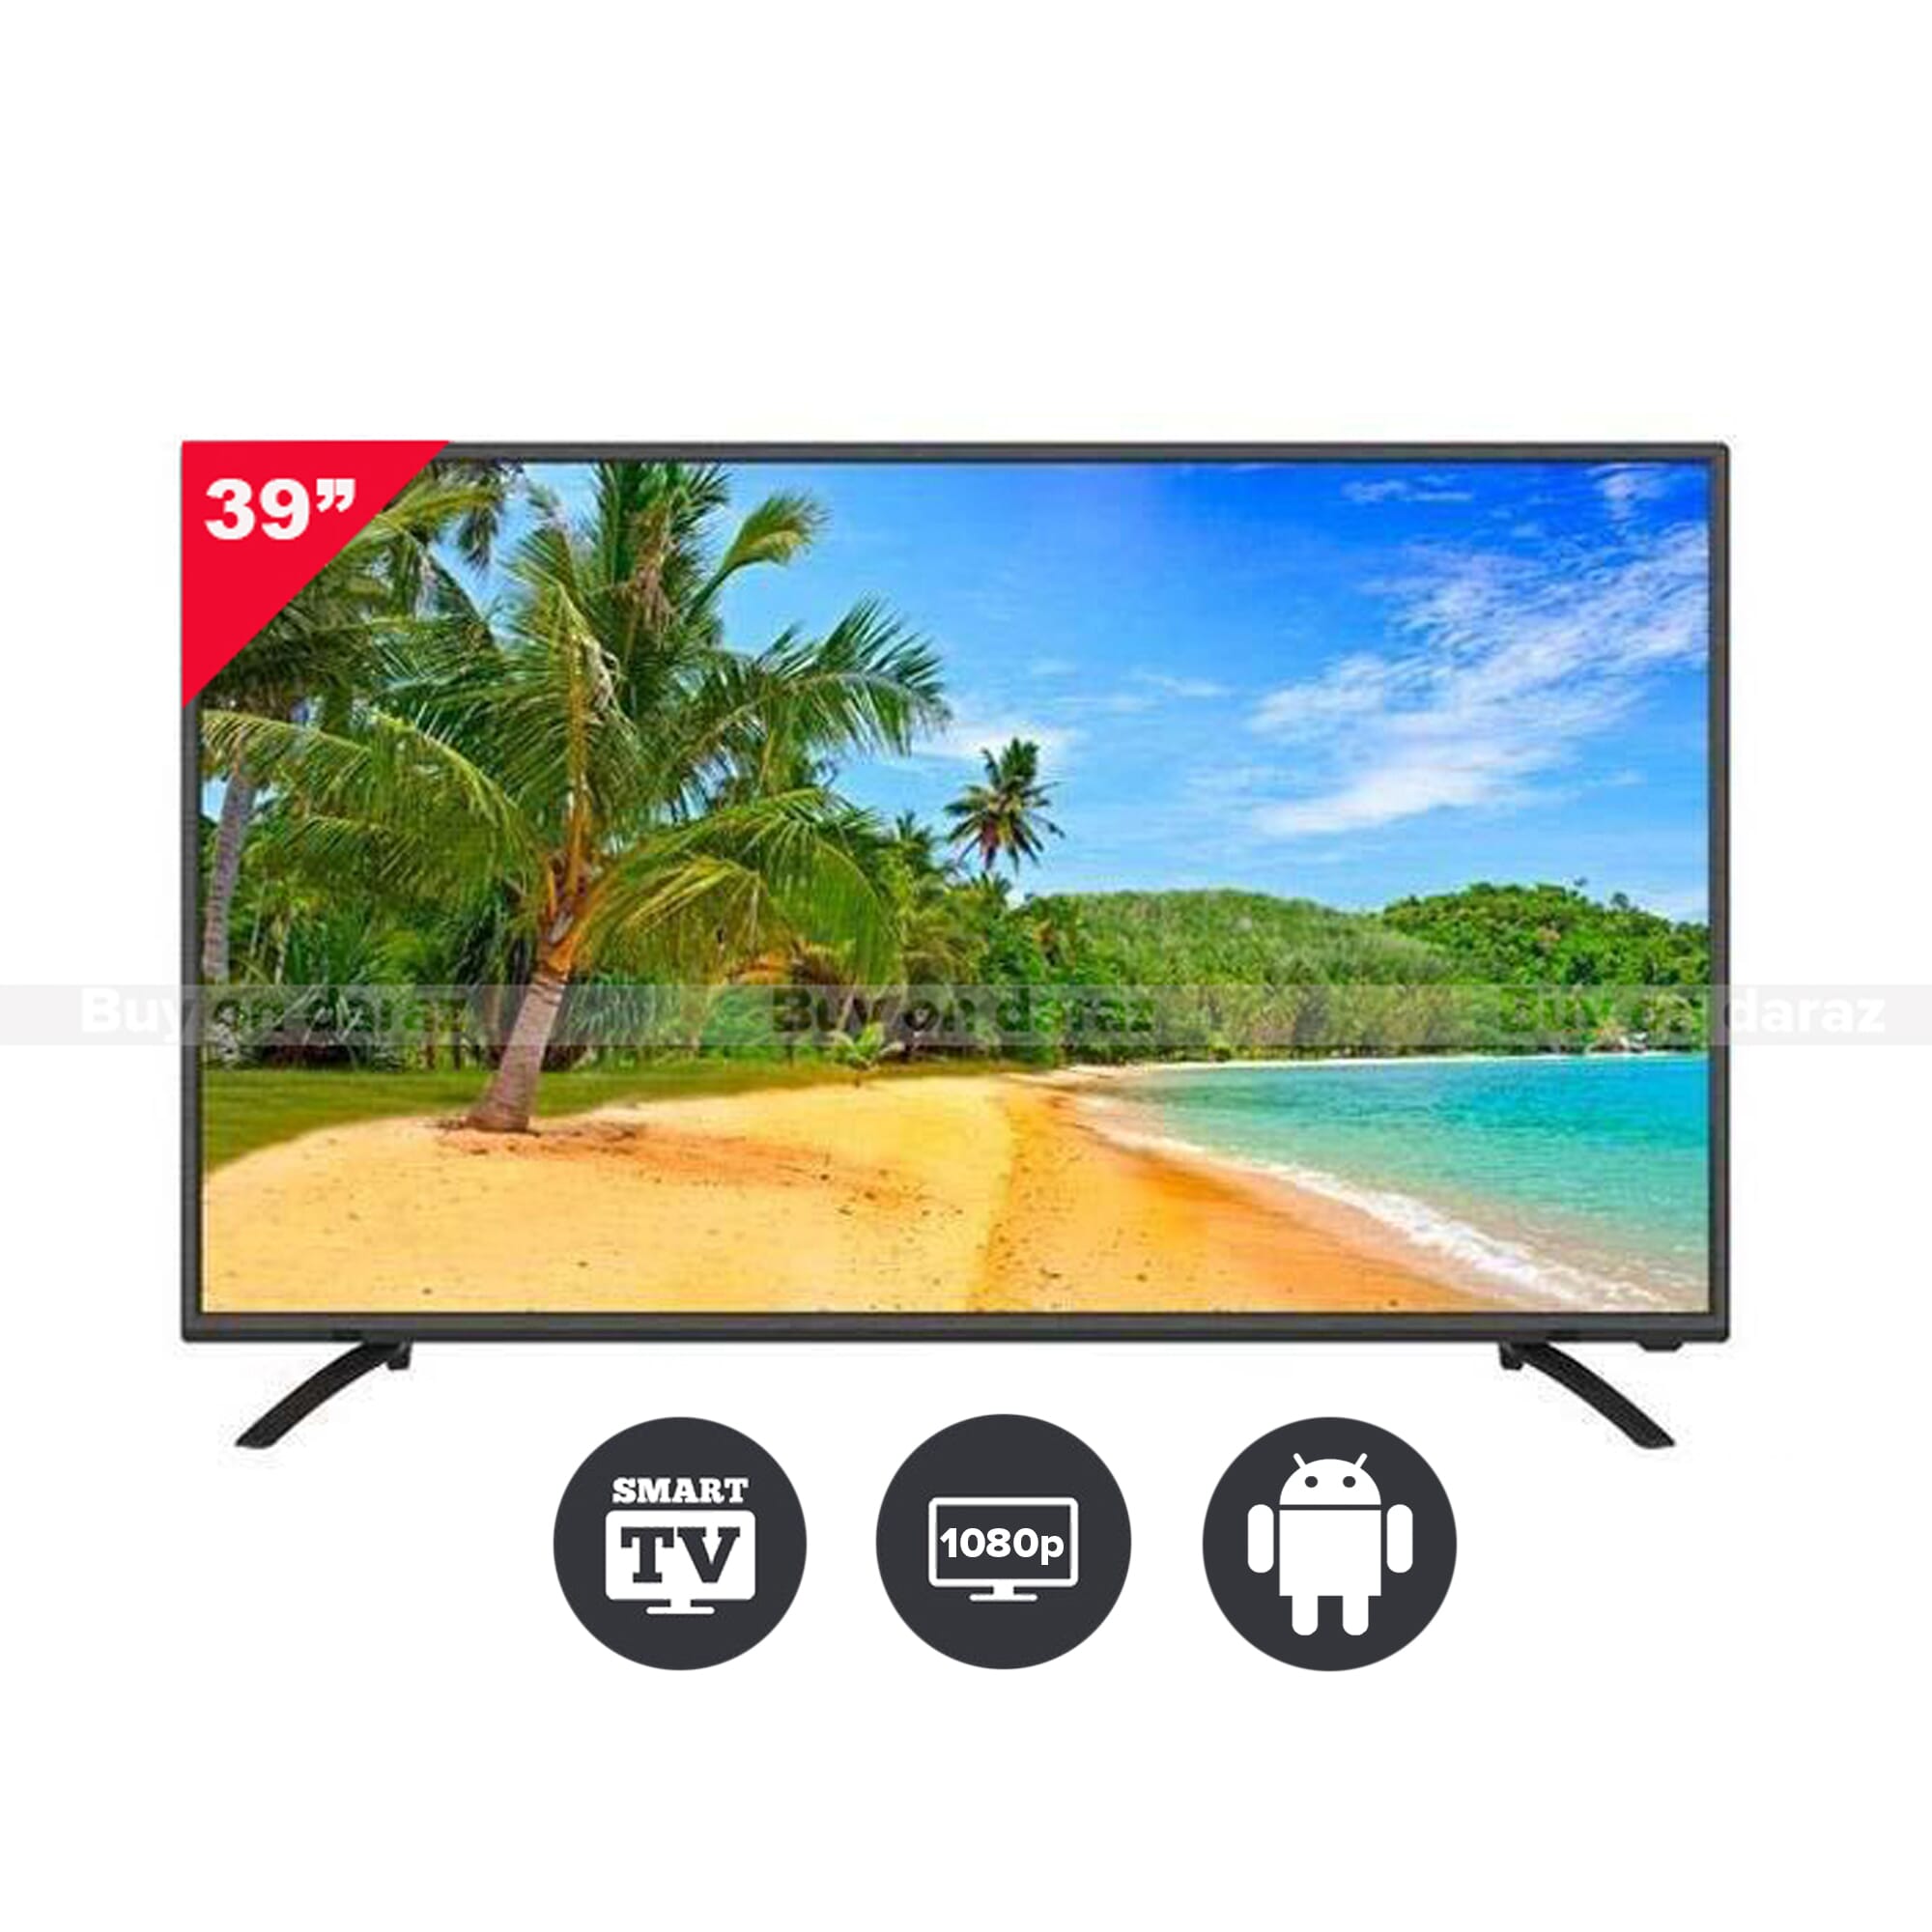 Idea 39 Android Smart TV